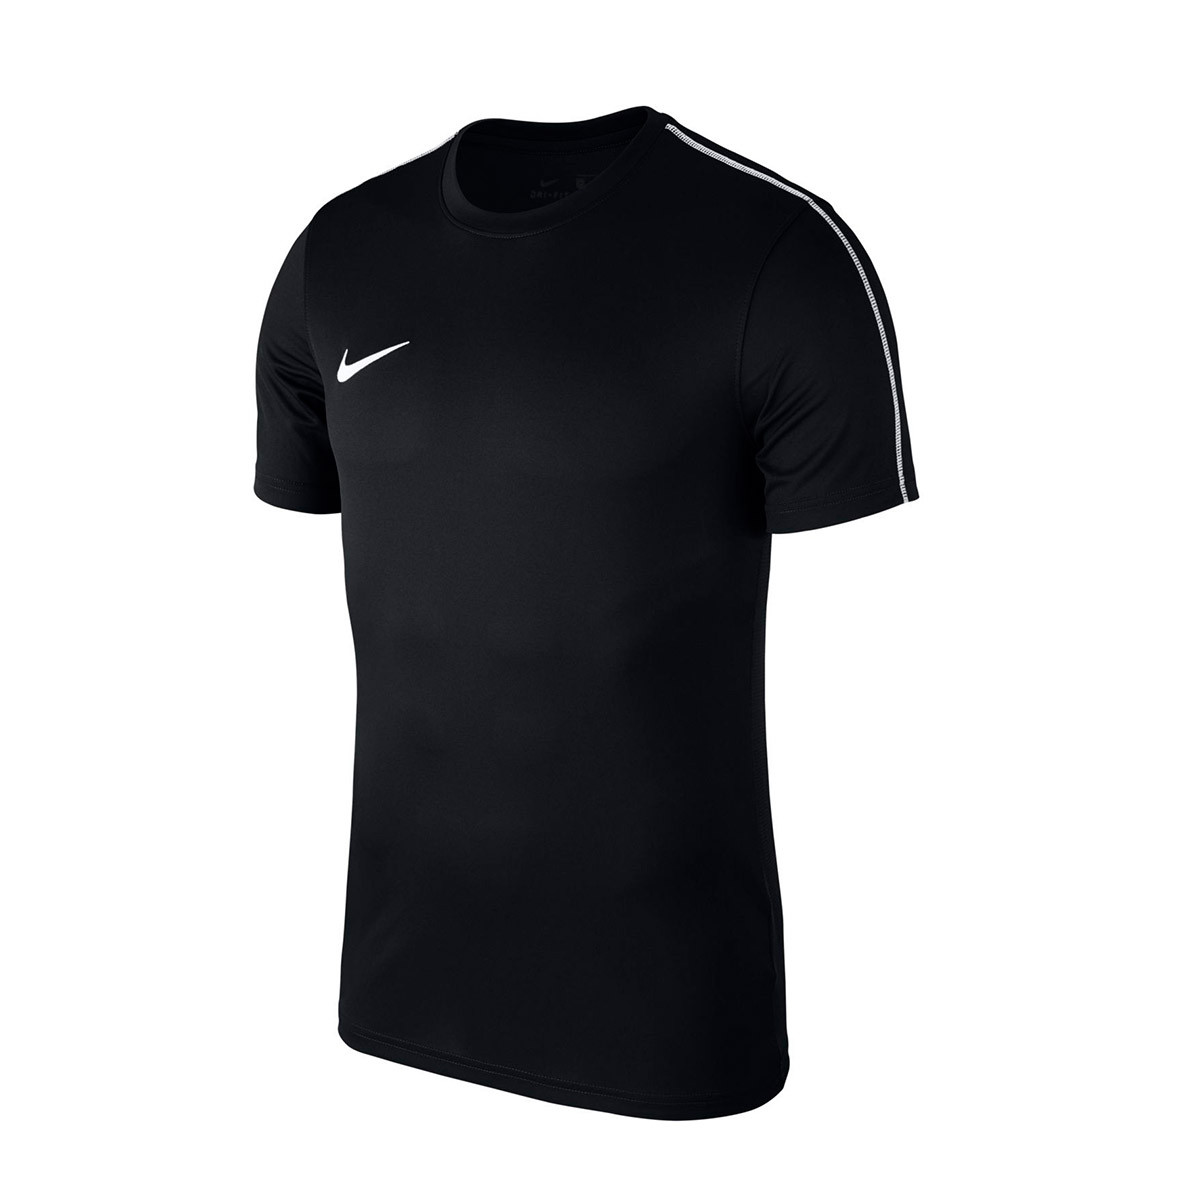 Camiseta Nike Park 18 Training m/c Niño Black-White - Tienda de fútbol  Fútbol Emotion